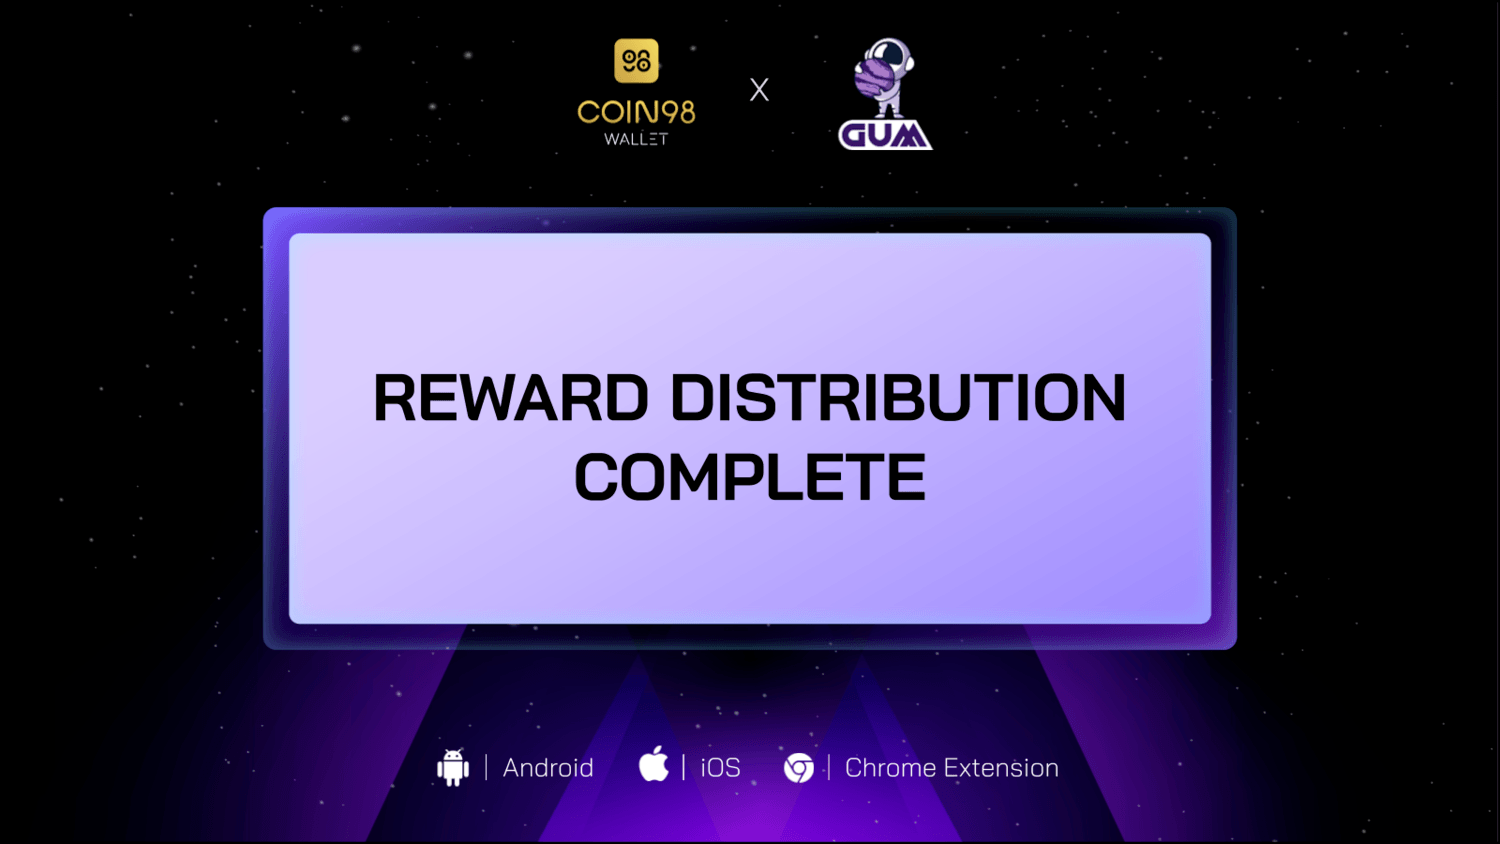 gum reward distribution complete